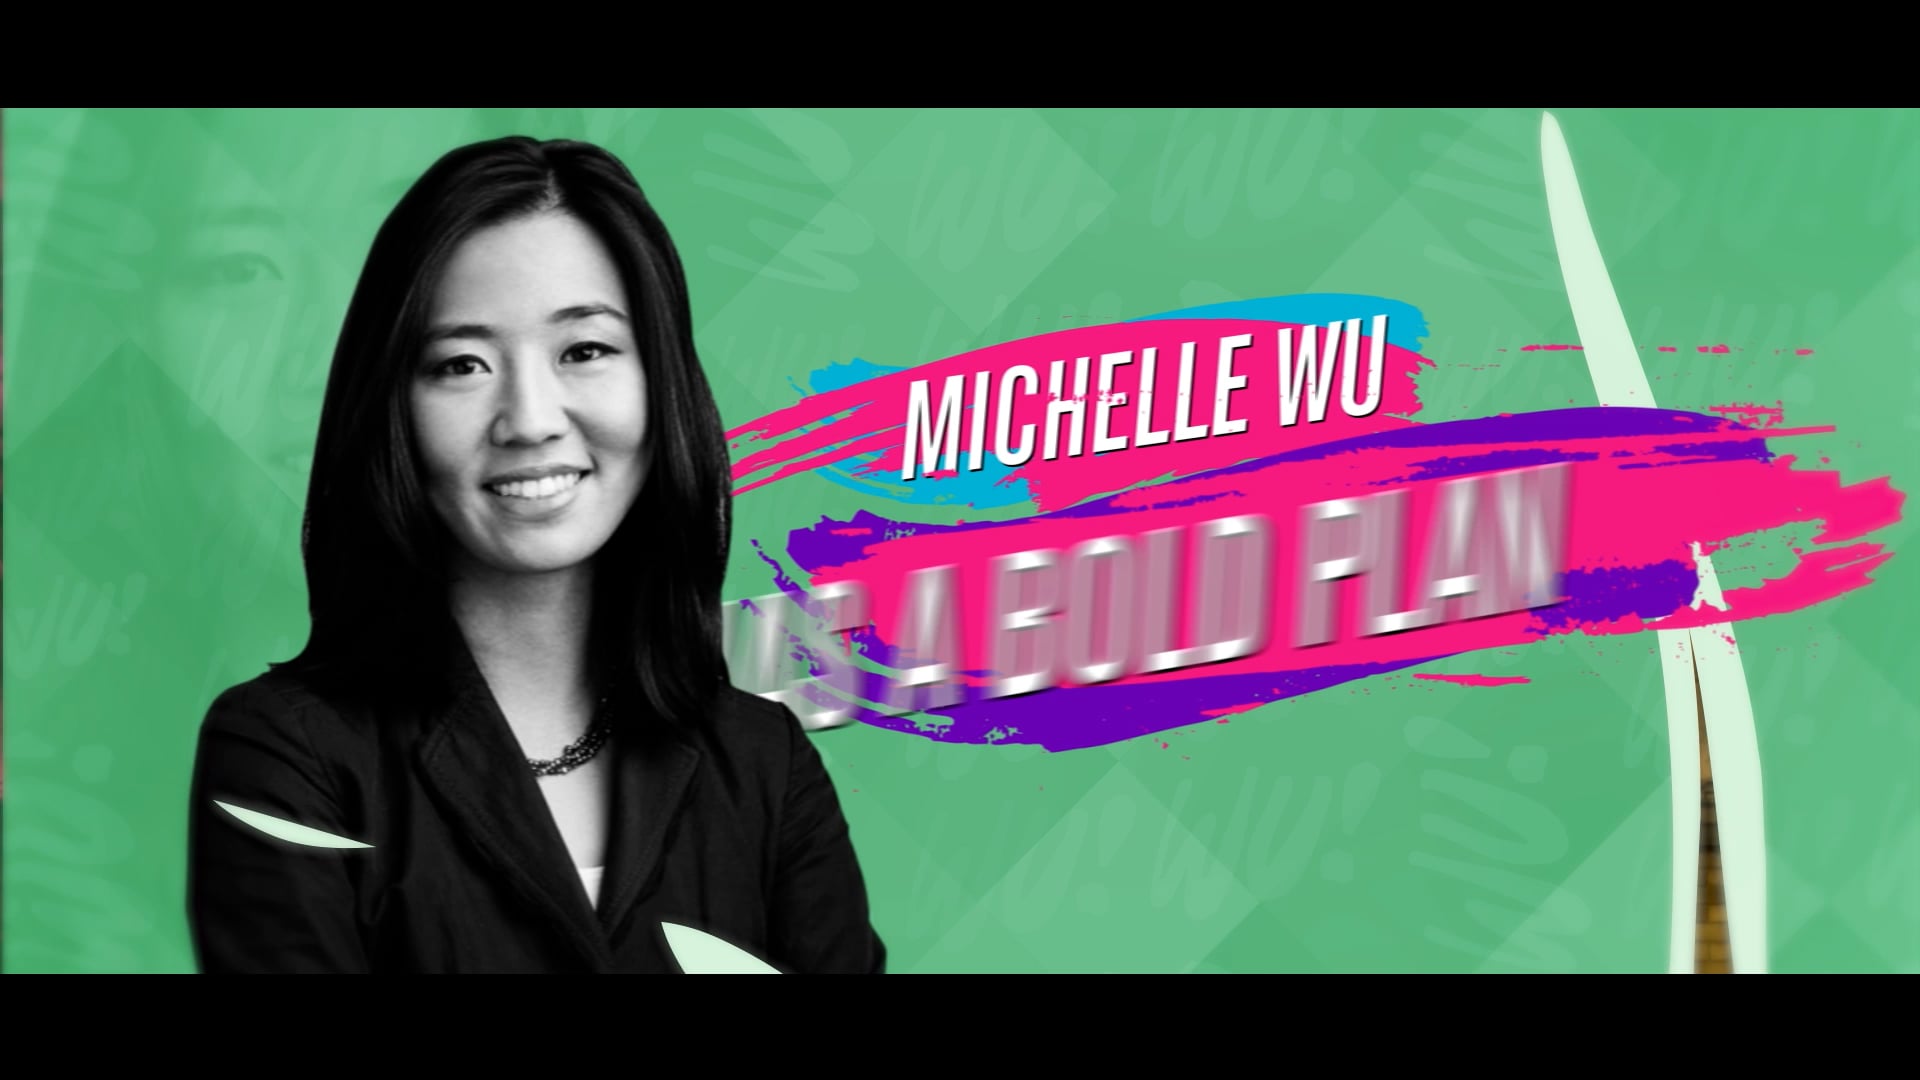 "Michelle Wu for Mayor"